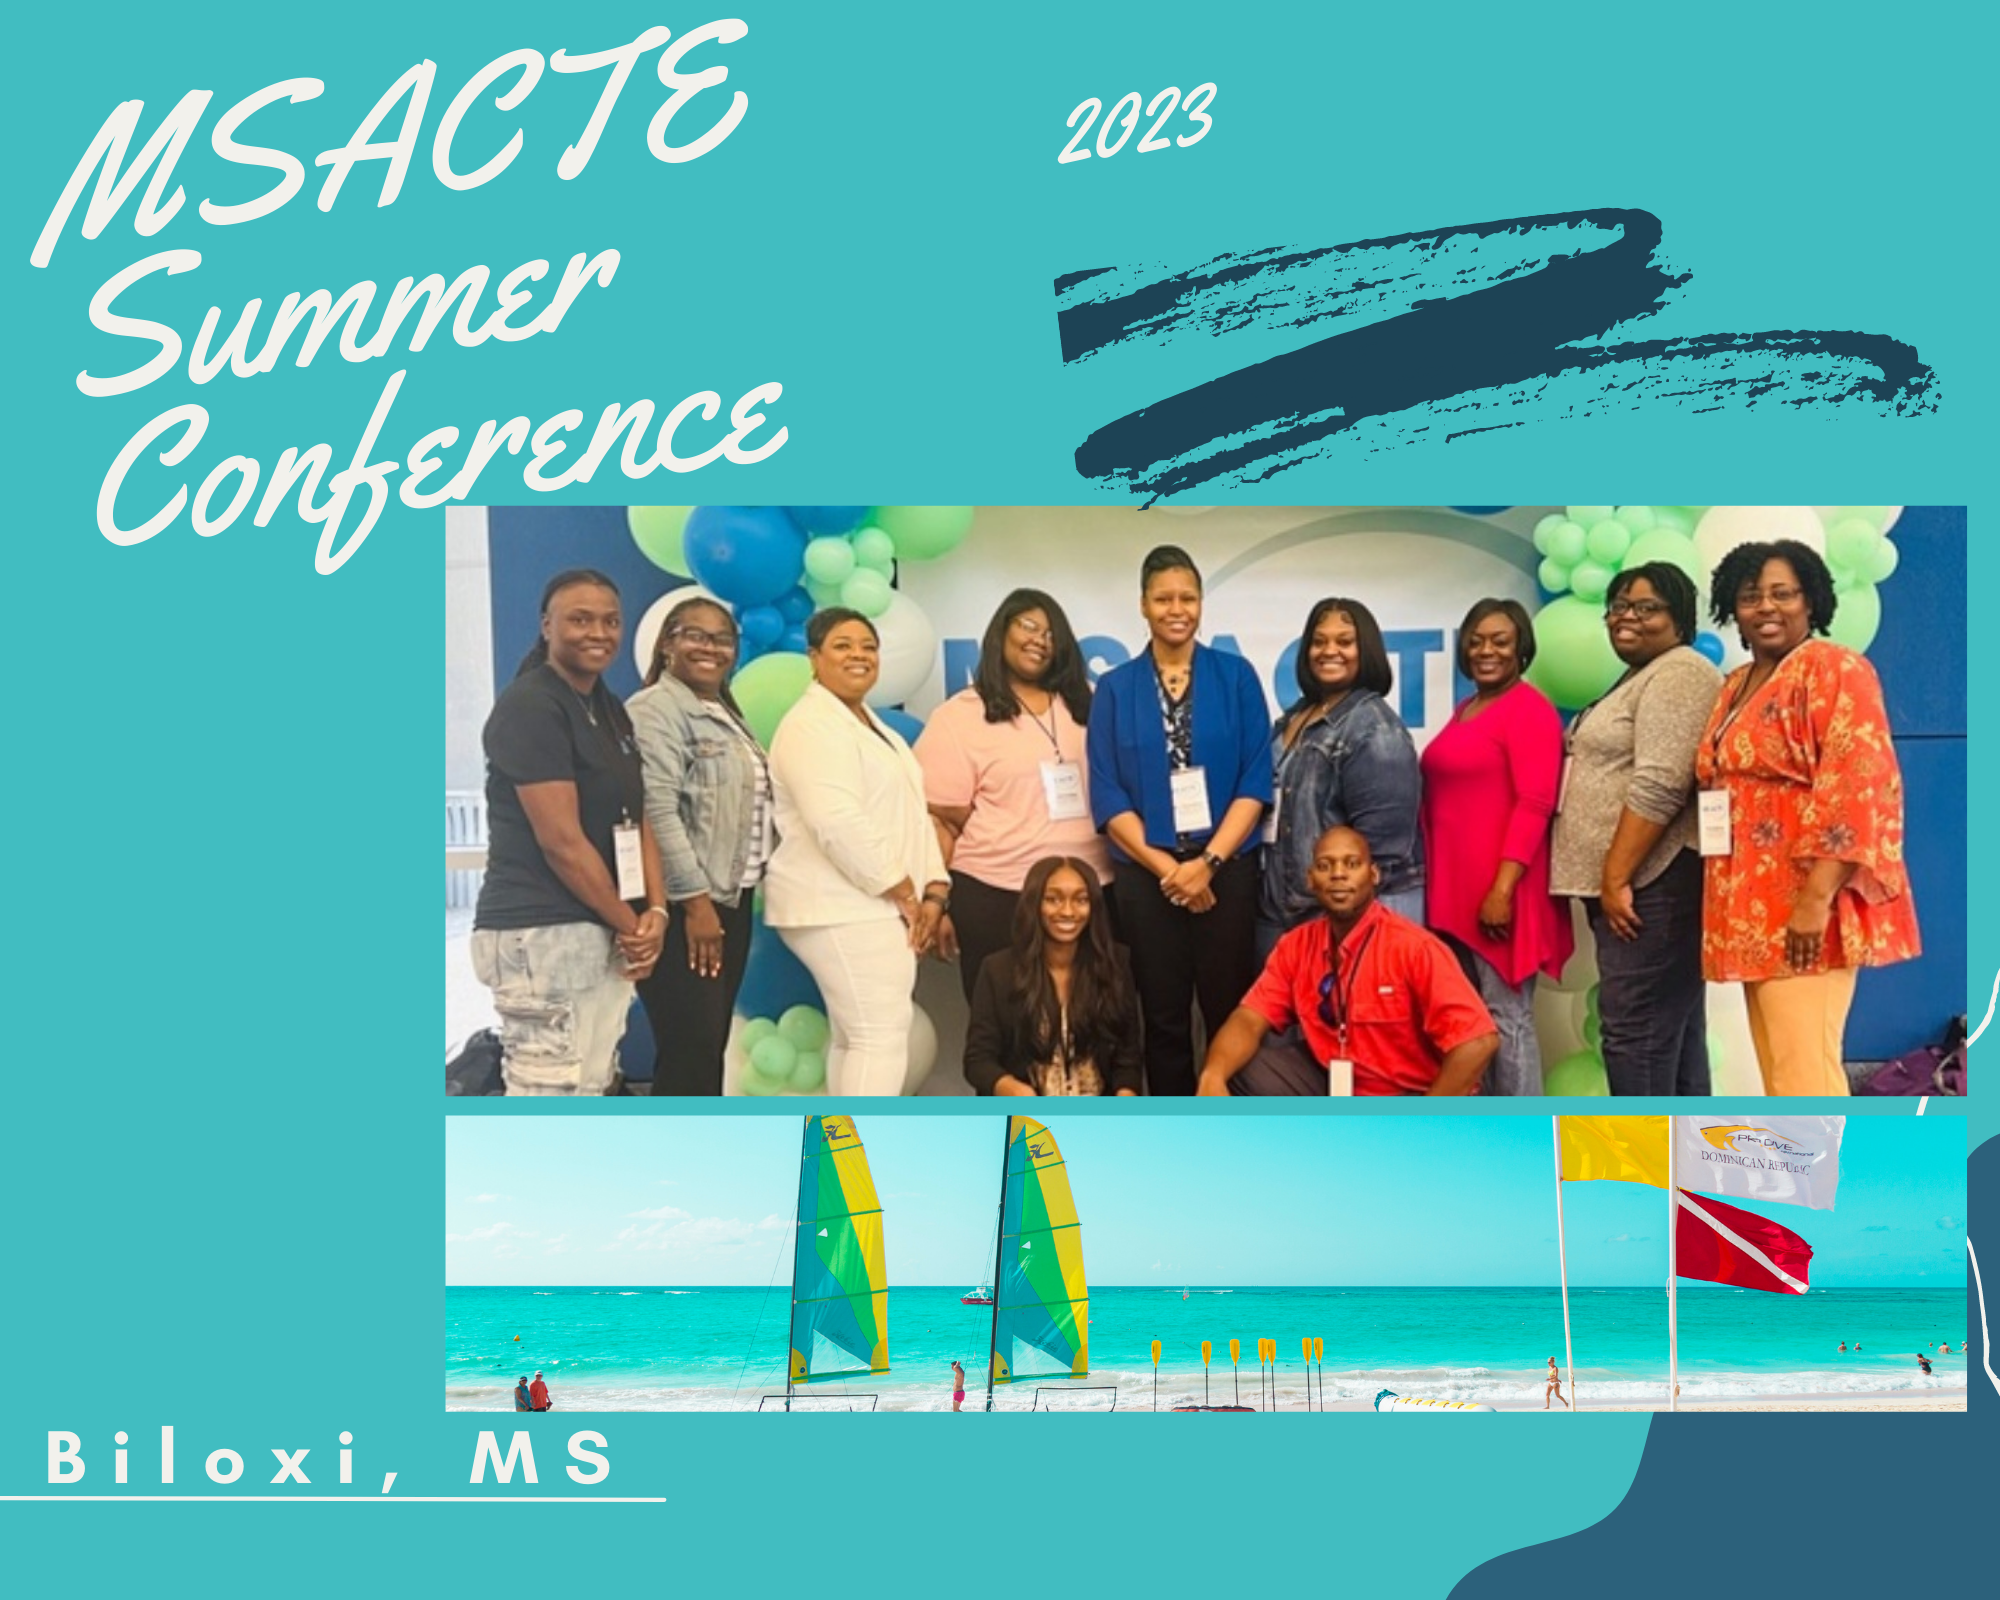 MSACTE Summer Conference 2023 Biloxi, MS